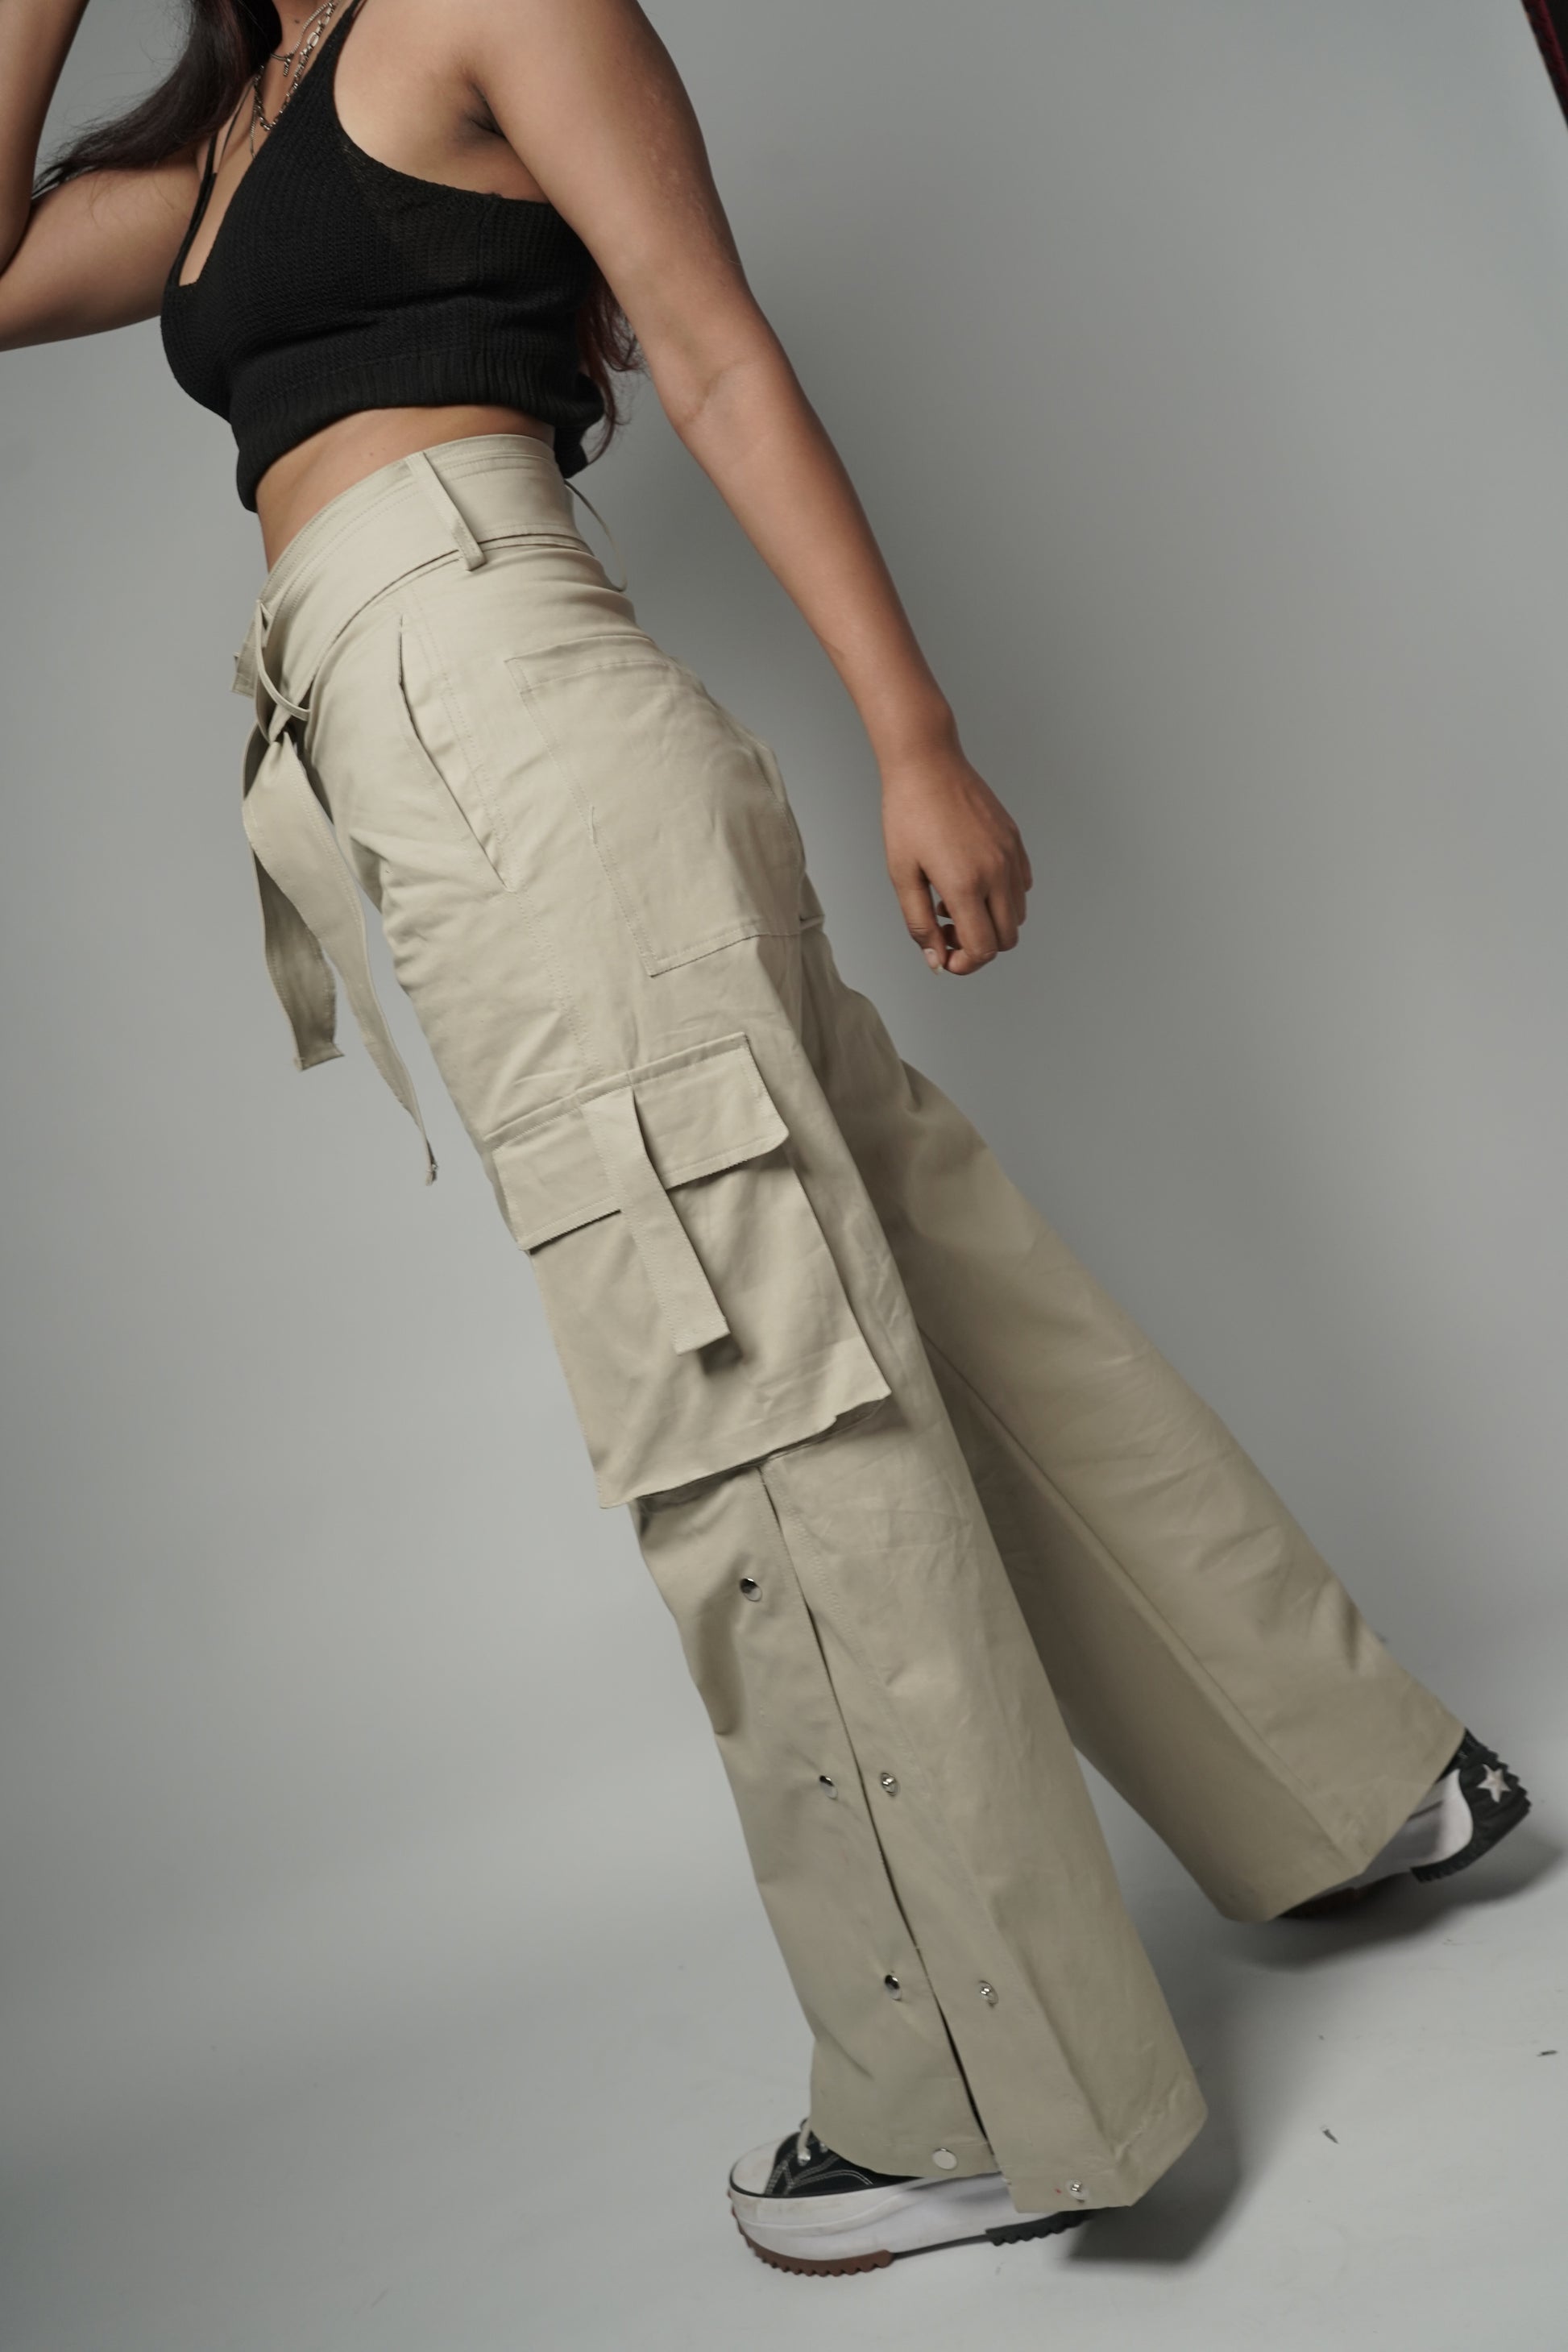 Model wearing unisex Buttoned down Pants, showcasing bottom pant cut.